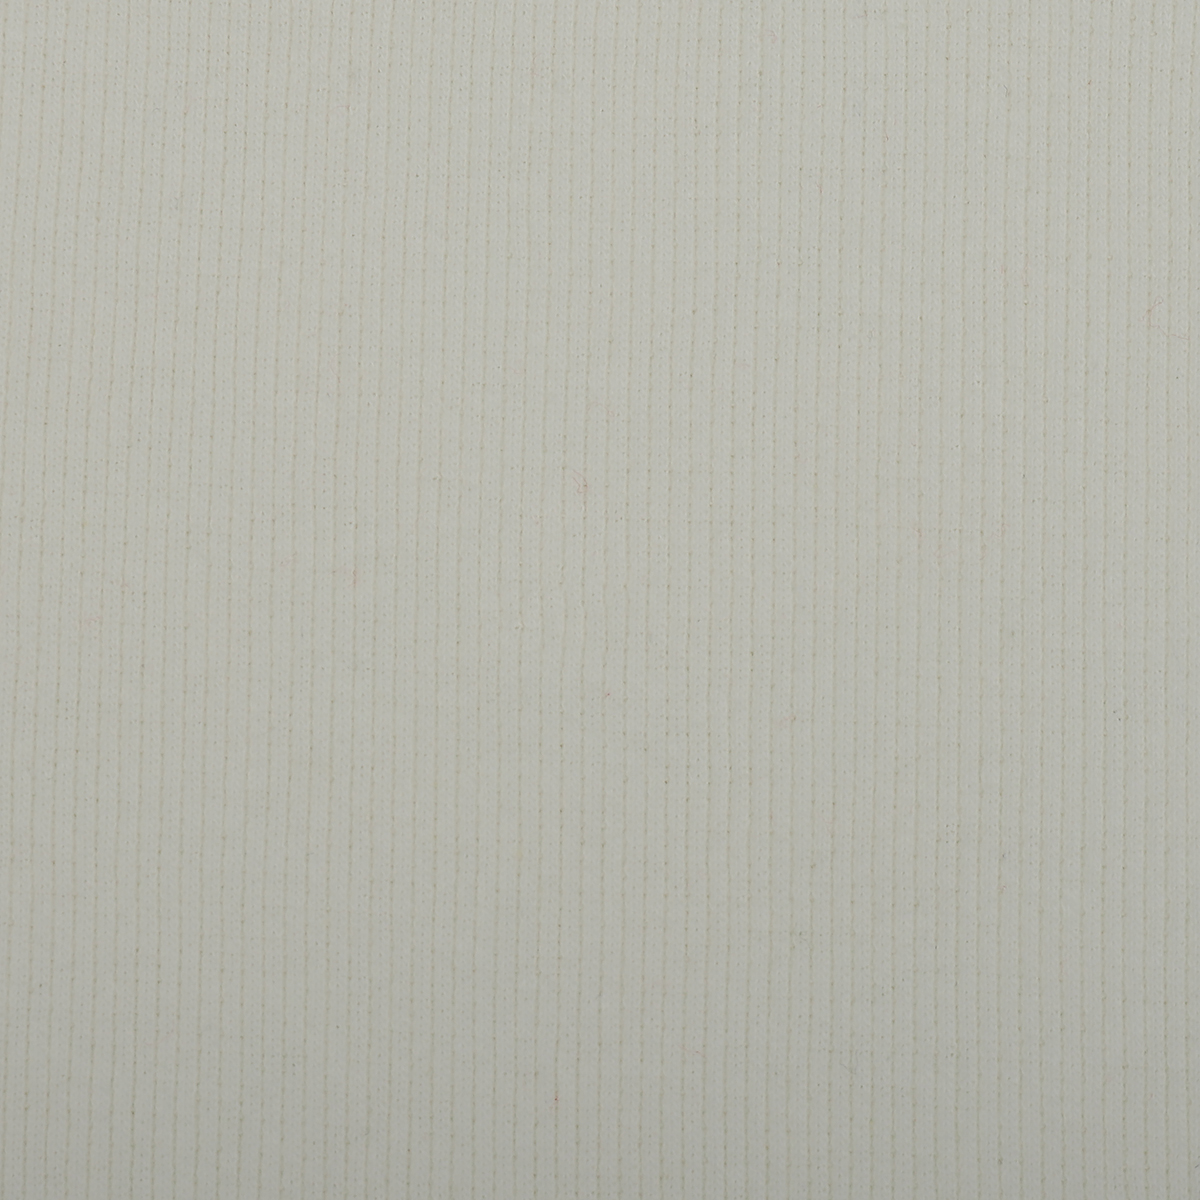 Ткань трикотаж Кашкорсе с лайкрой 220г опененд 60+60см безе 11-4201 уп.3м